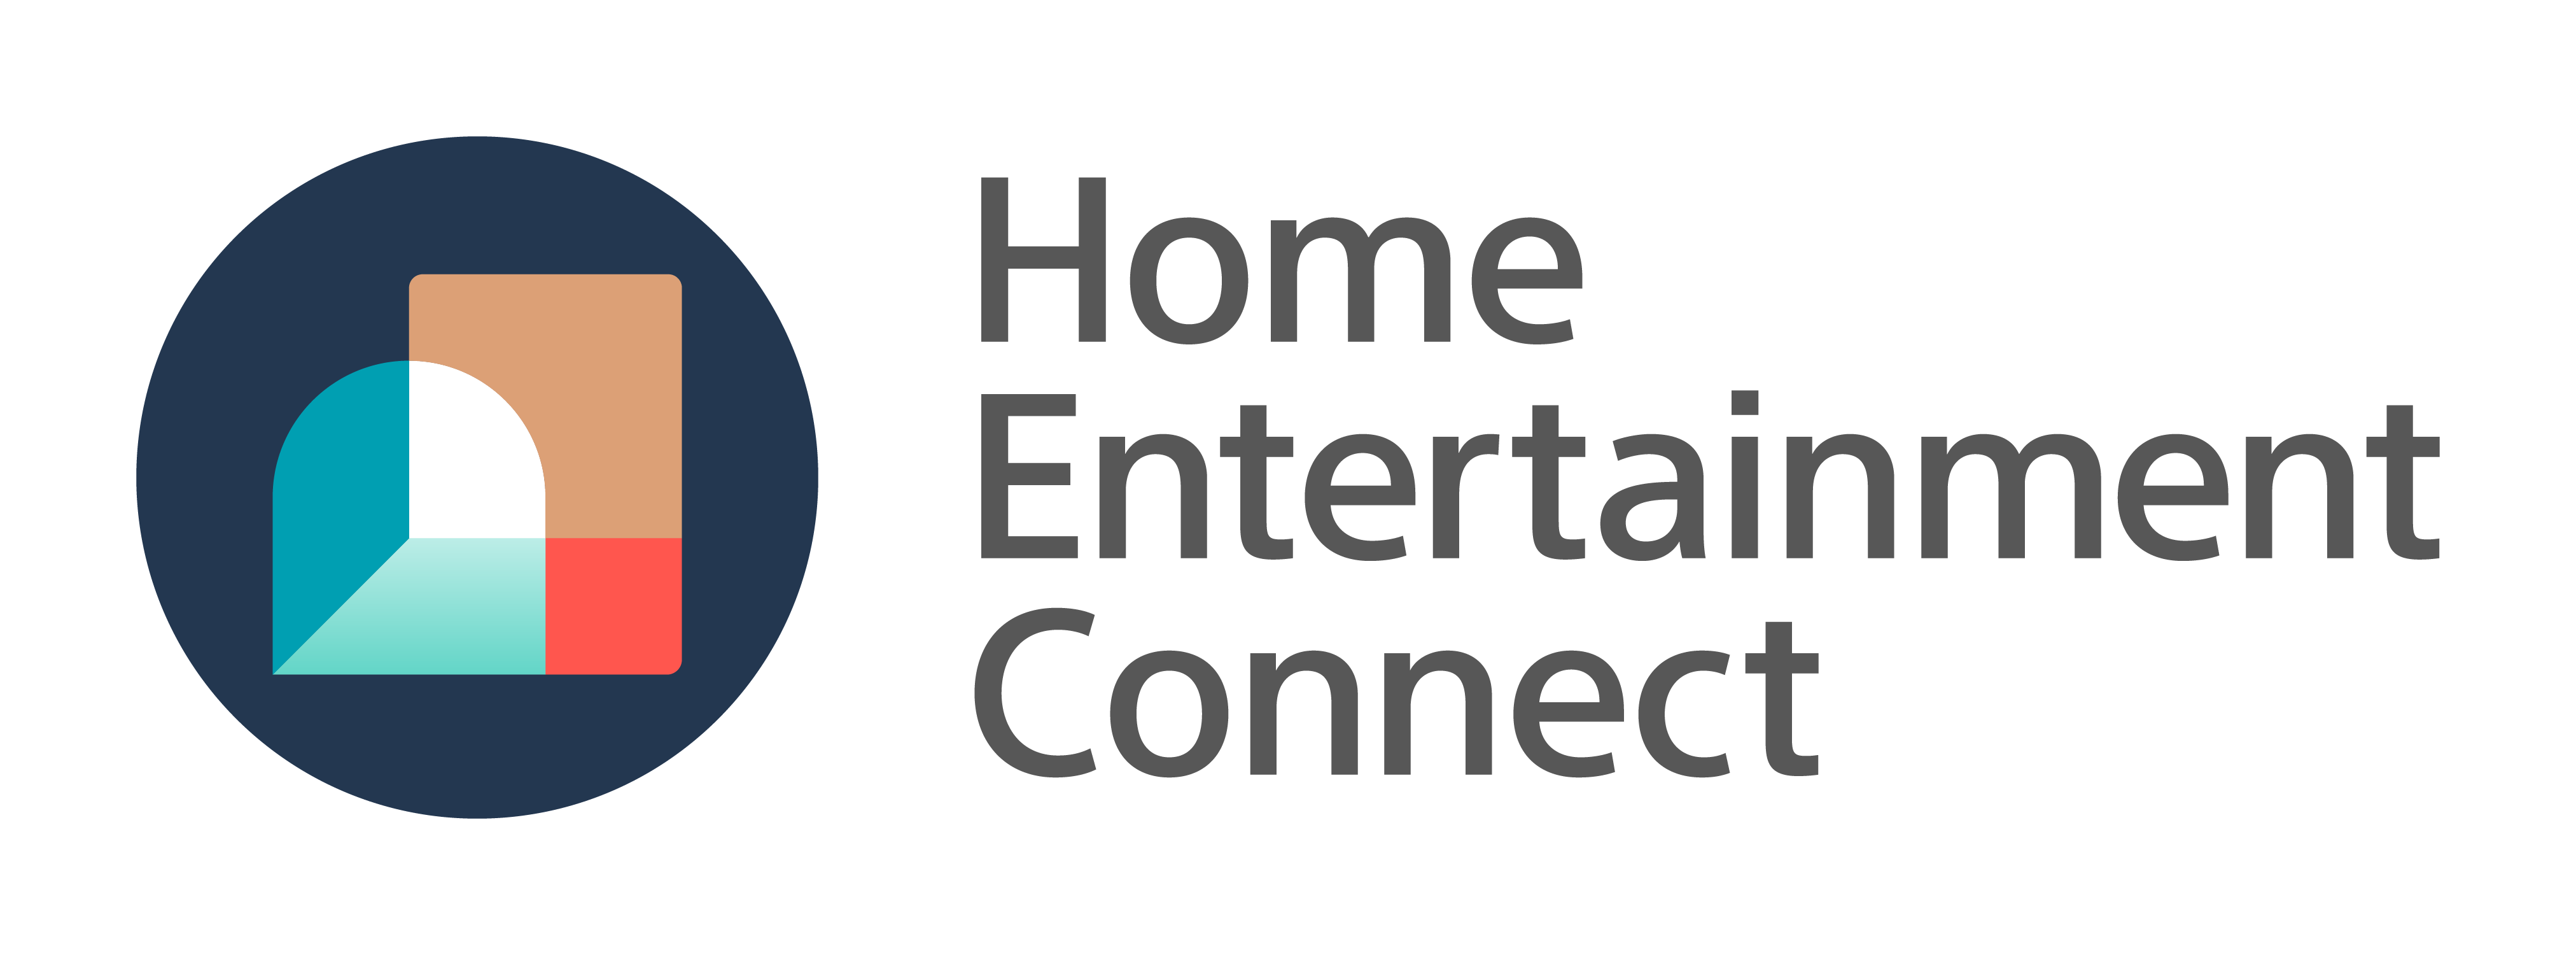 Home Entertainment Connect